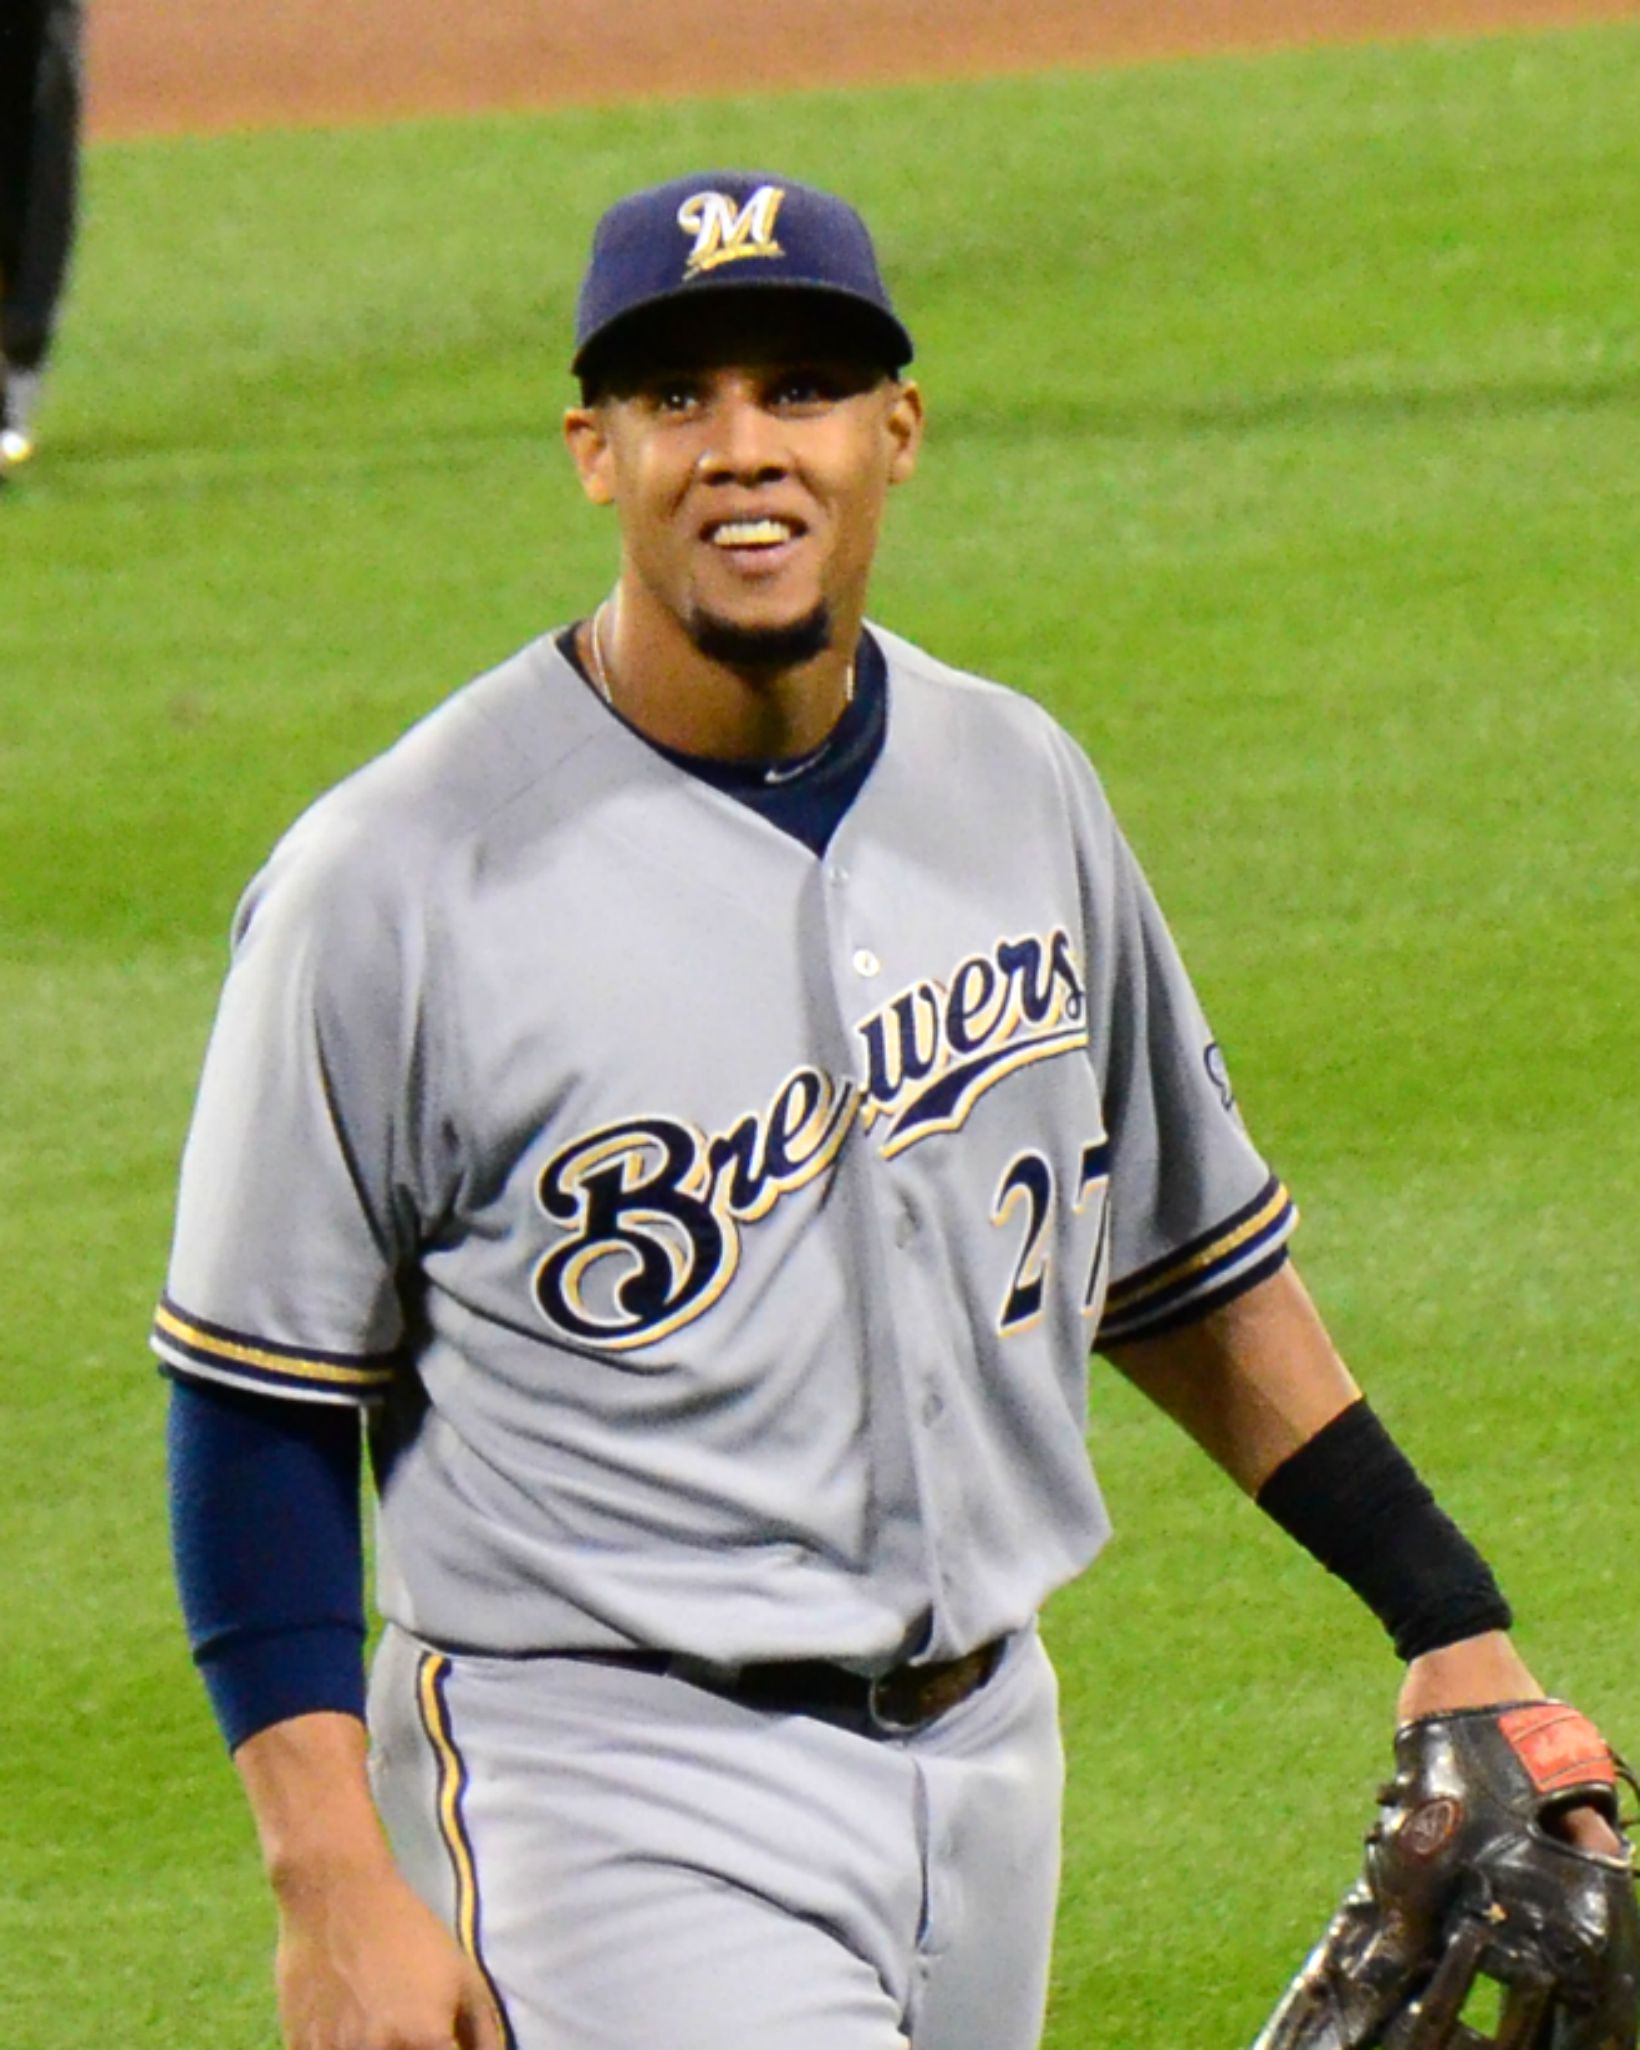 a professional baseball player stands on a baseball field